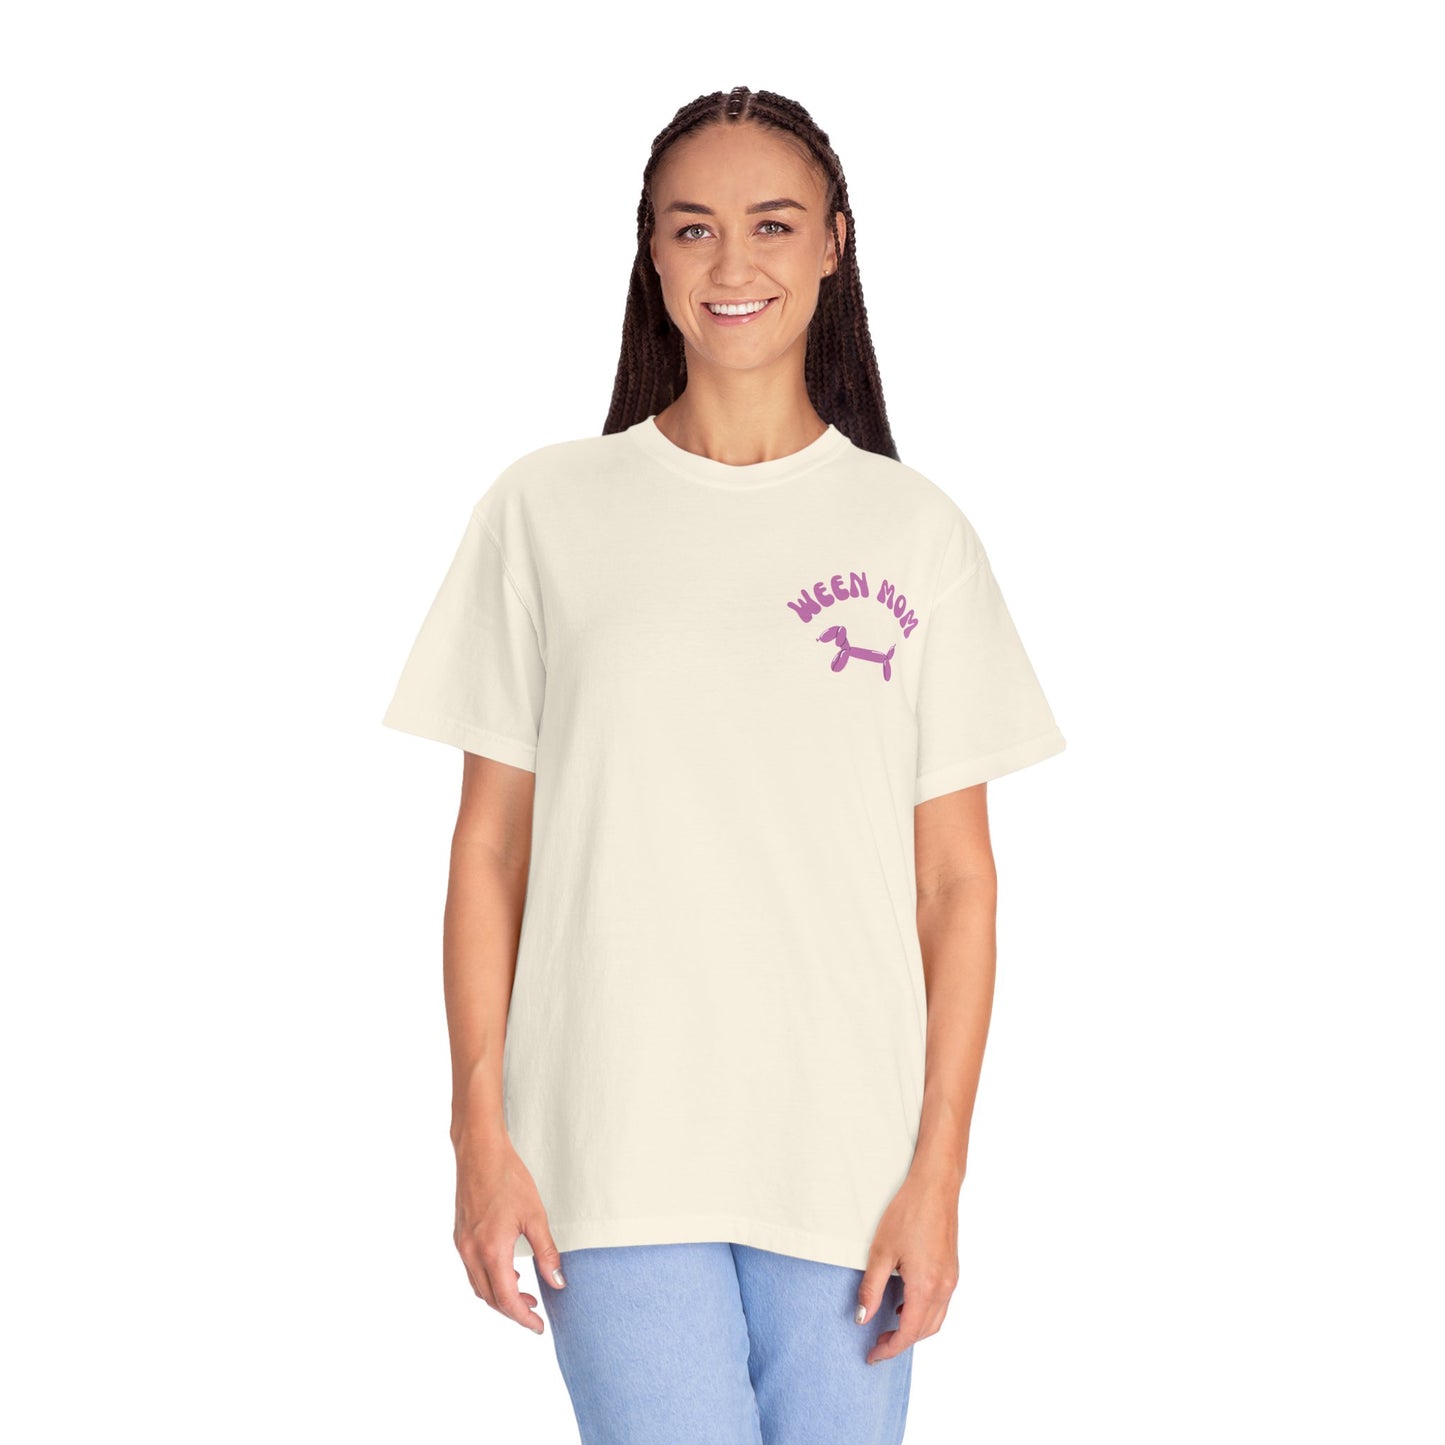 WEEN MOM Unisex Garment-Dyed T-shirt